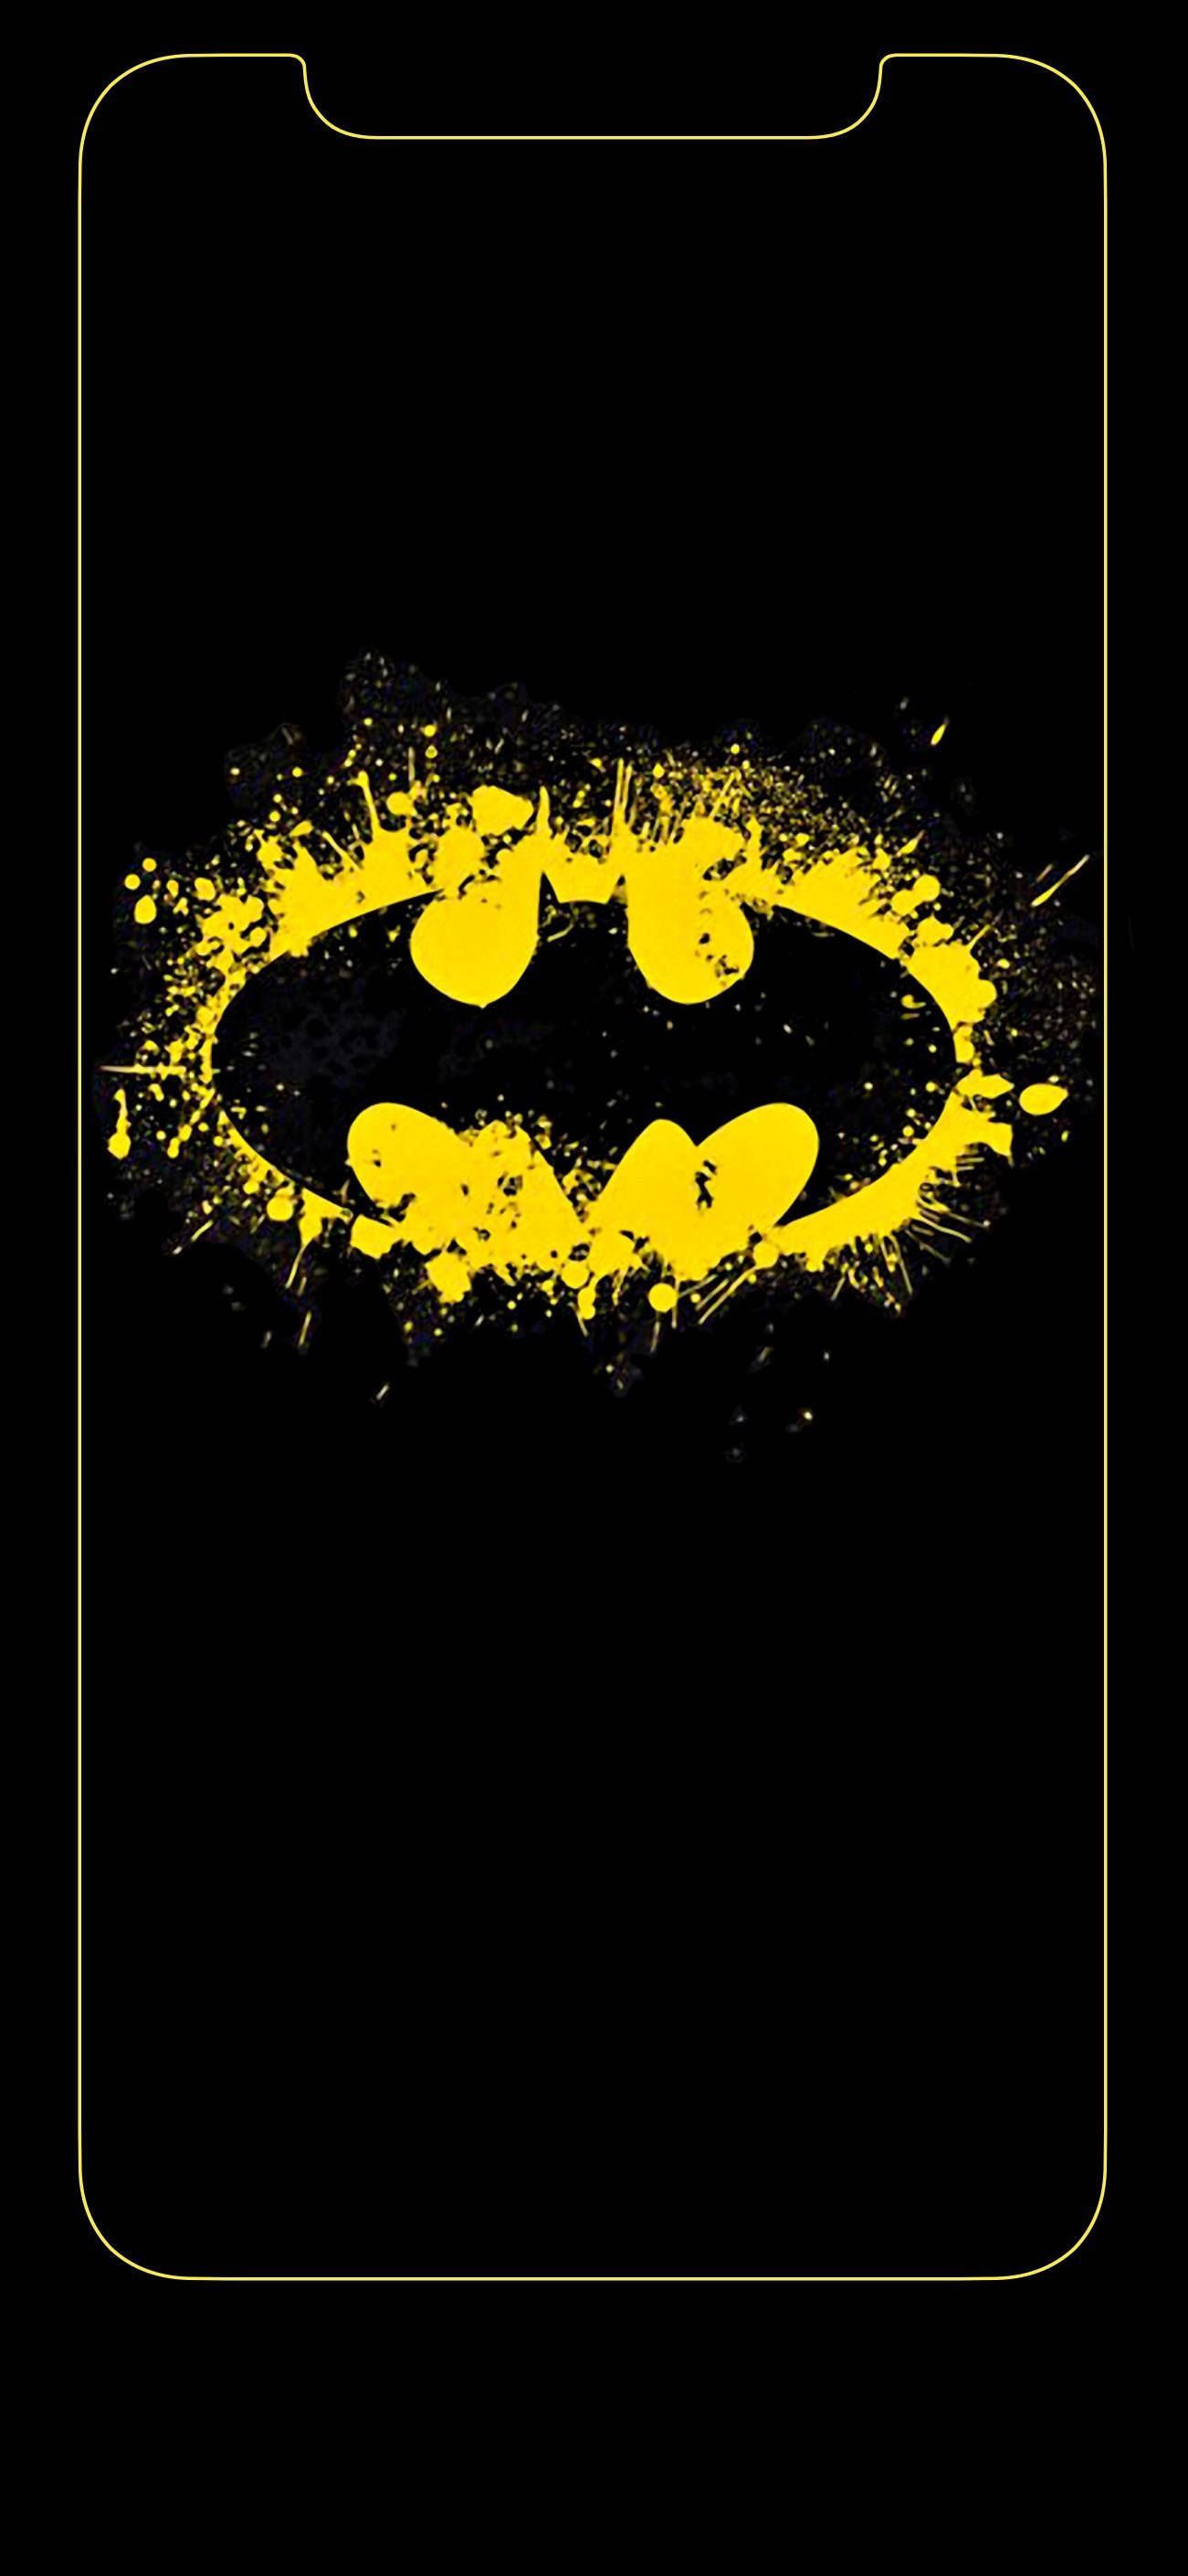 Batman Logo In Splash iPhone X Wallpaper